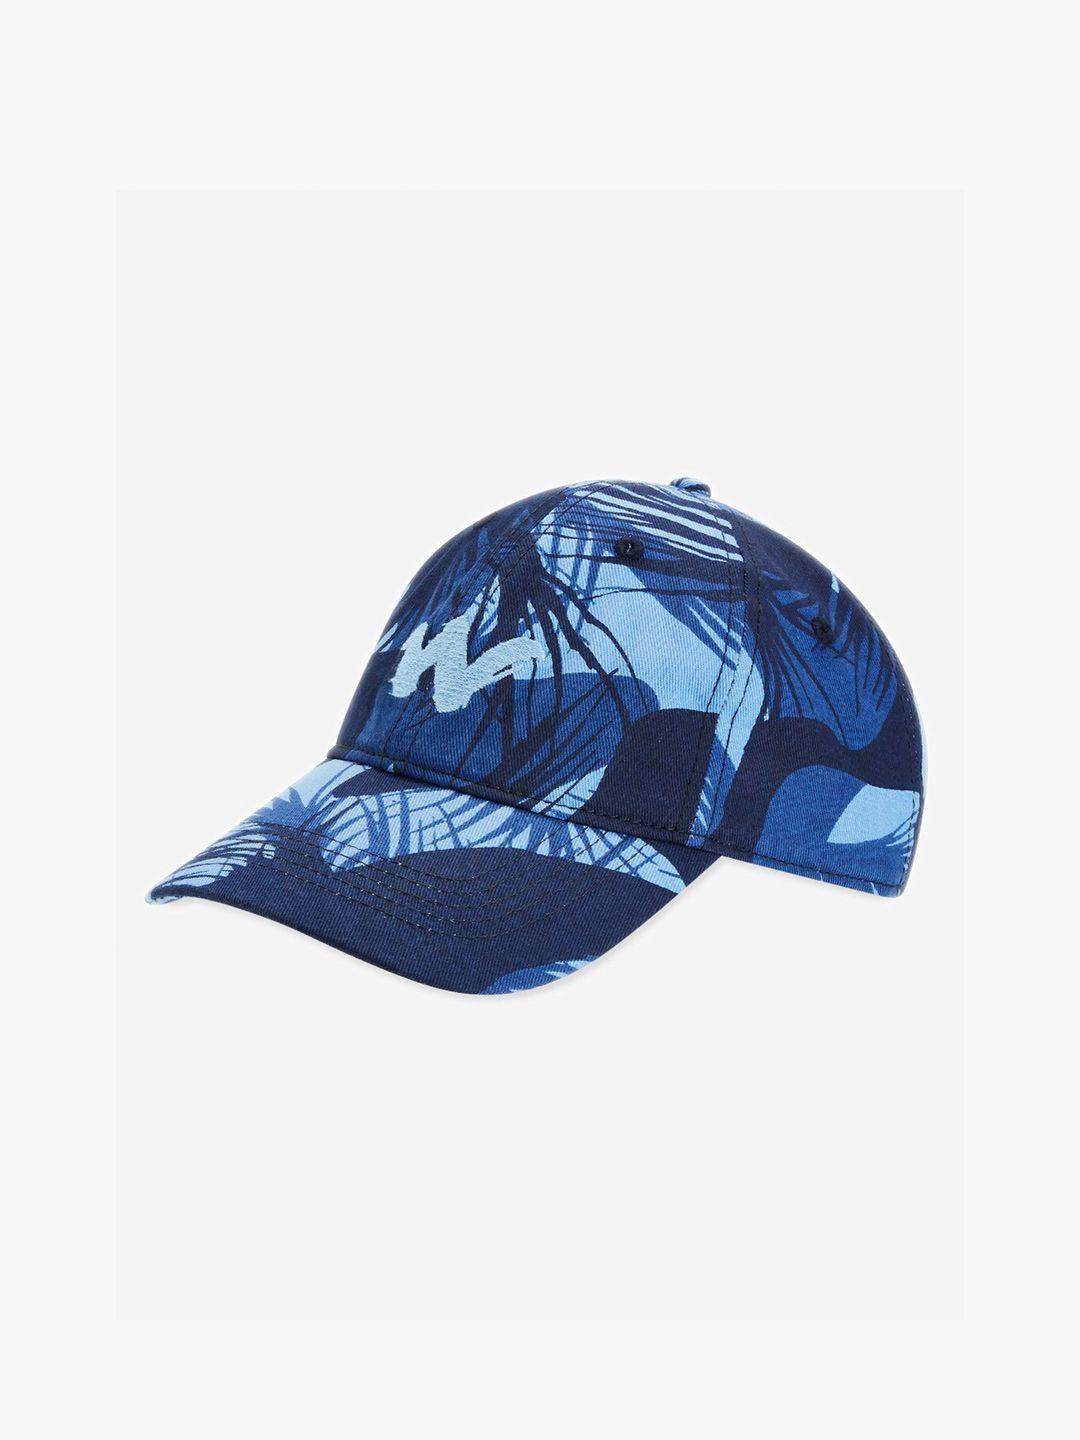 wildcraft adults navy blue & blue printed cotton baseball cap